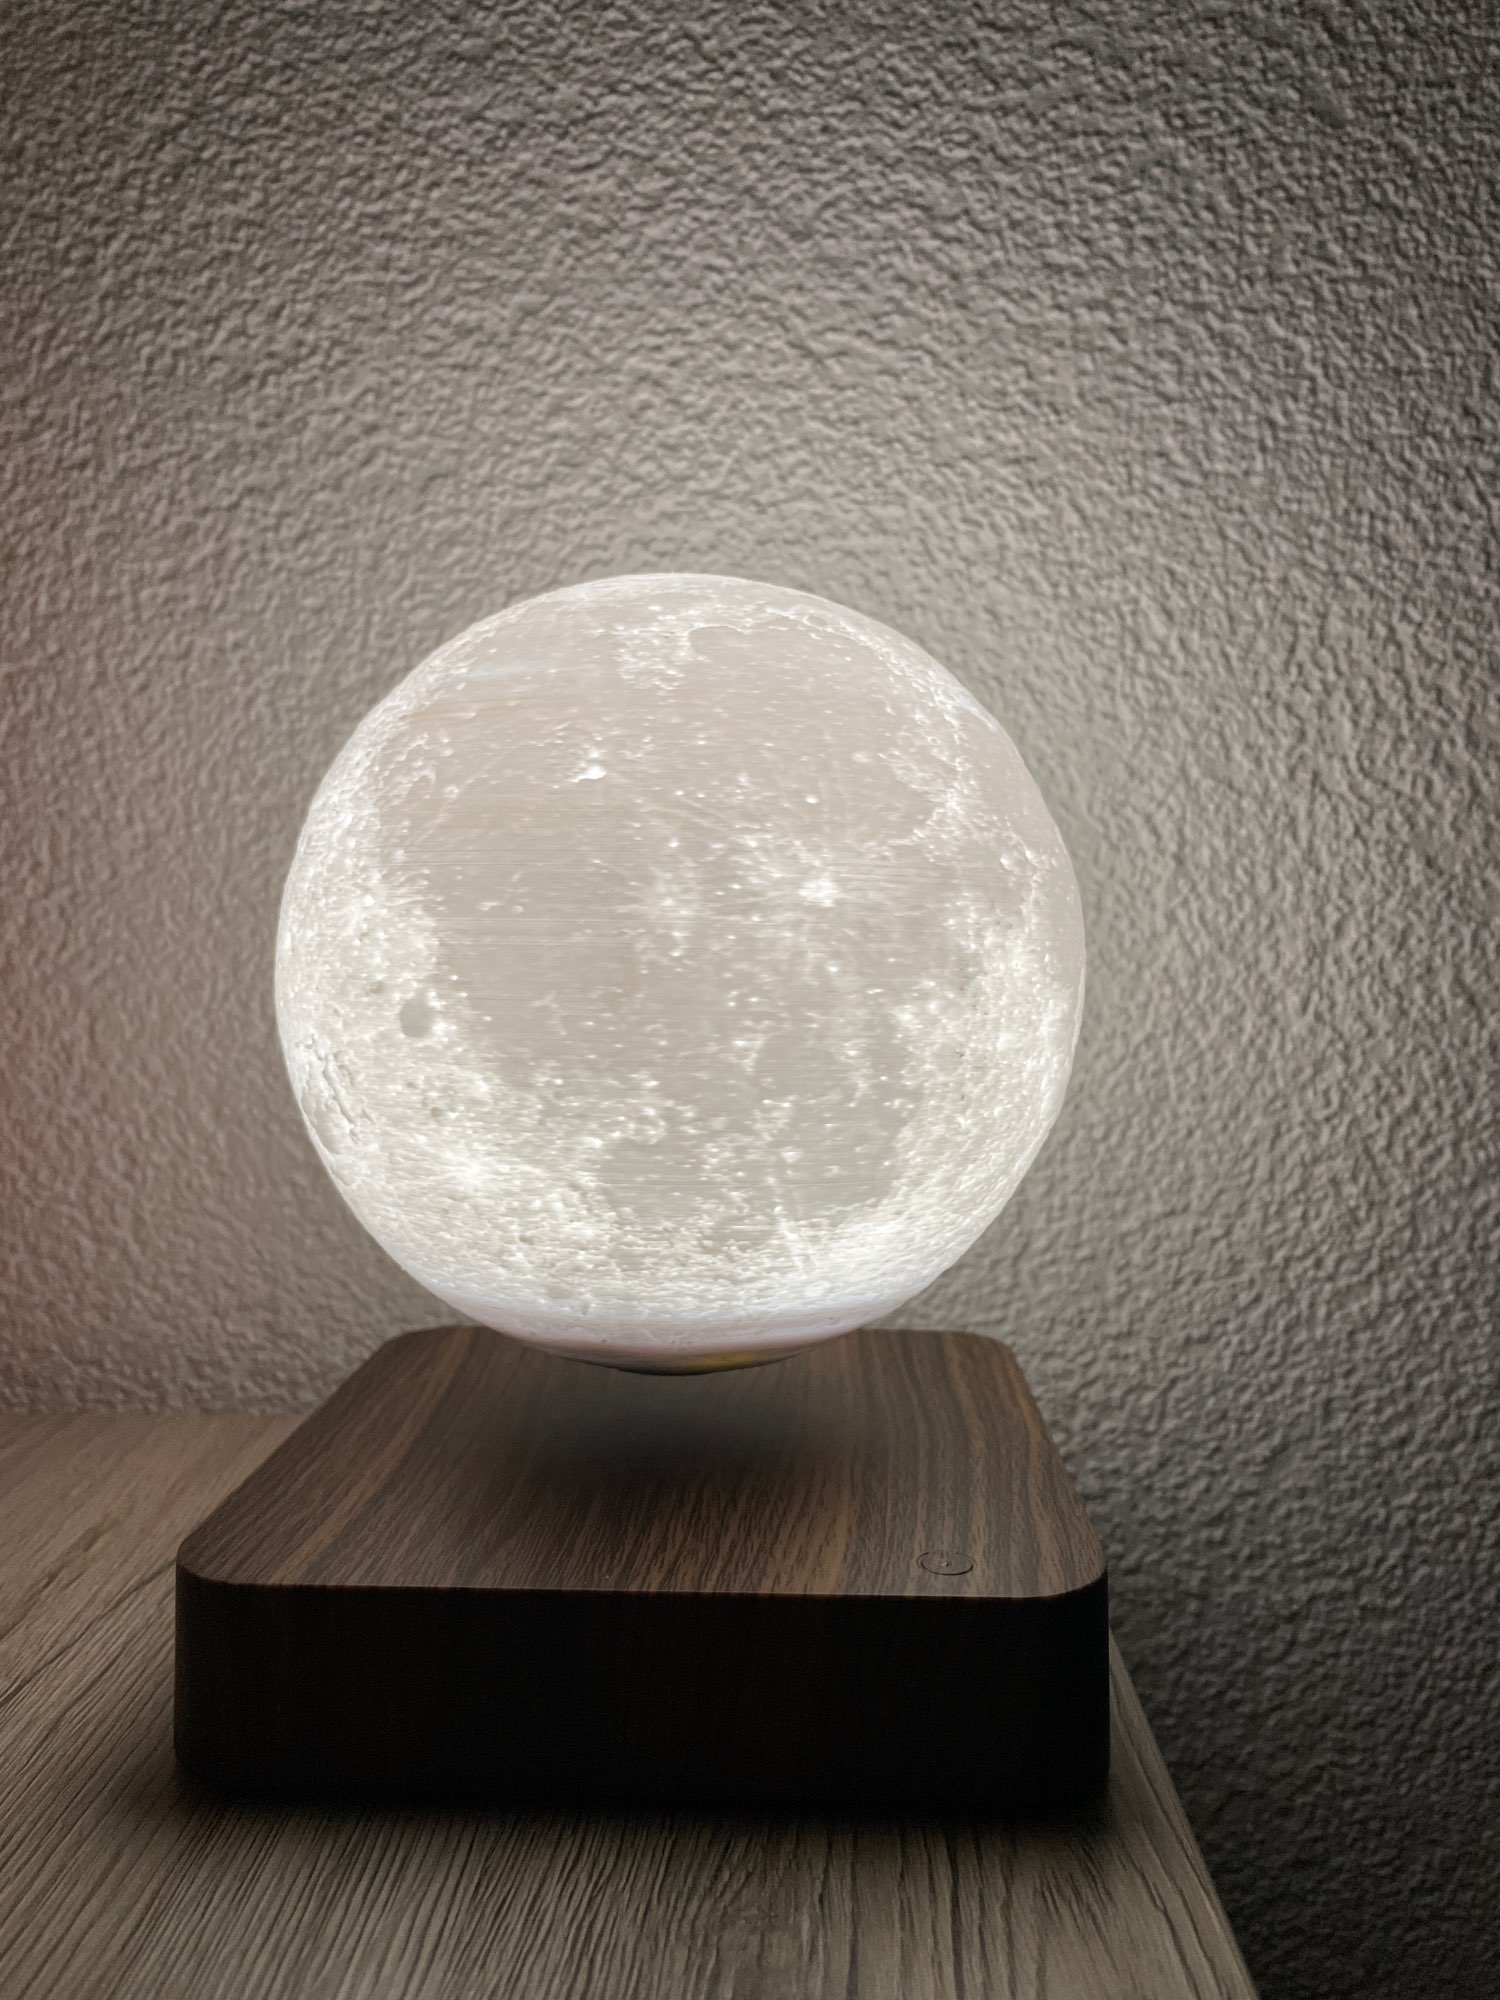 levitating moon lamp nightstand